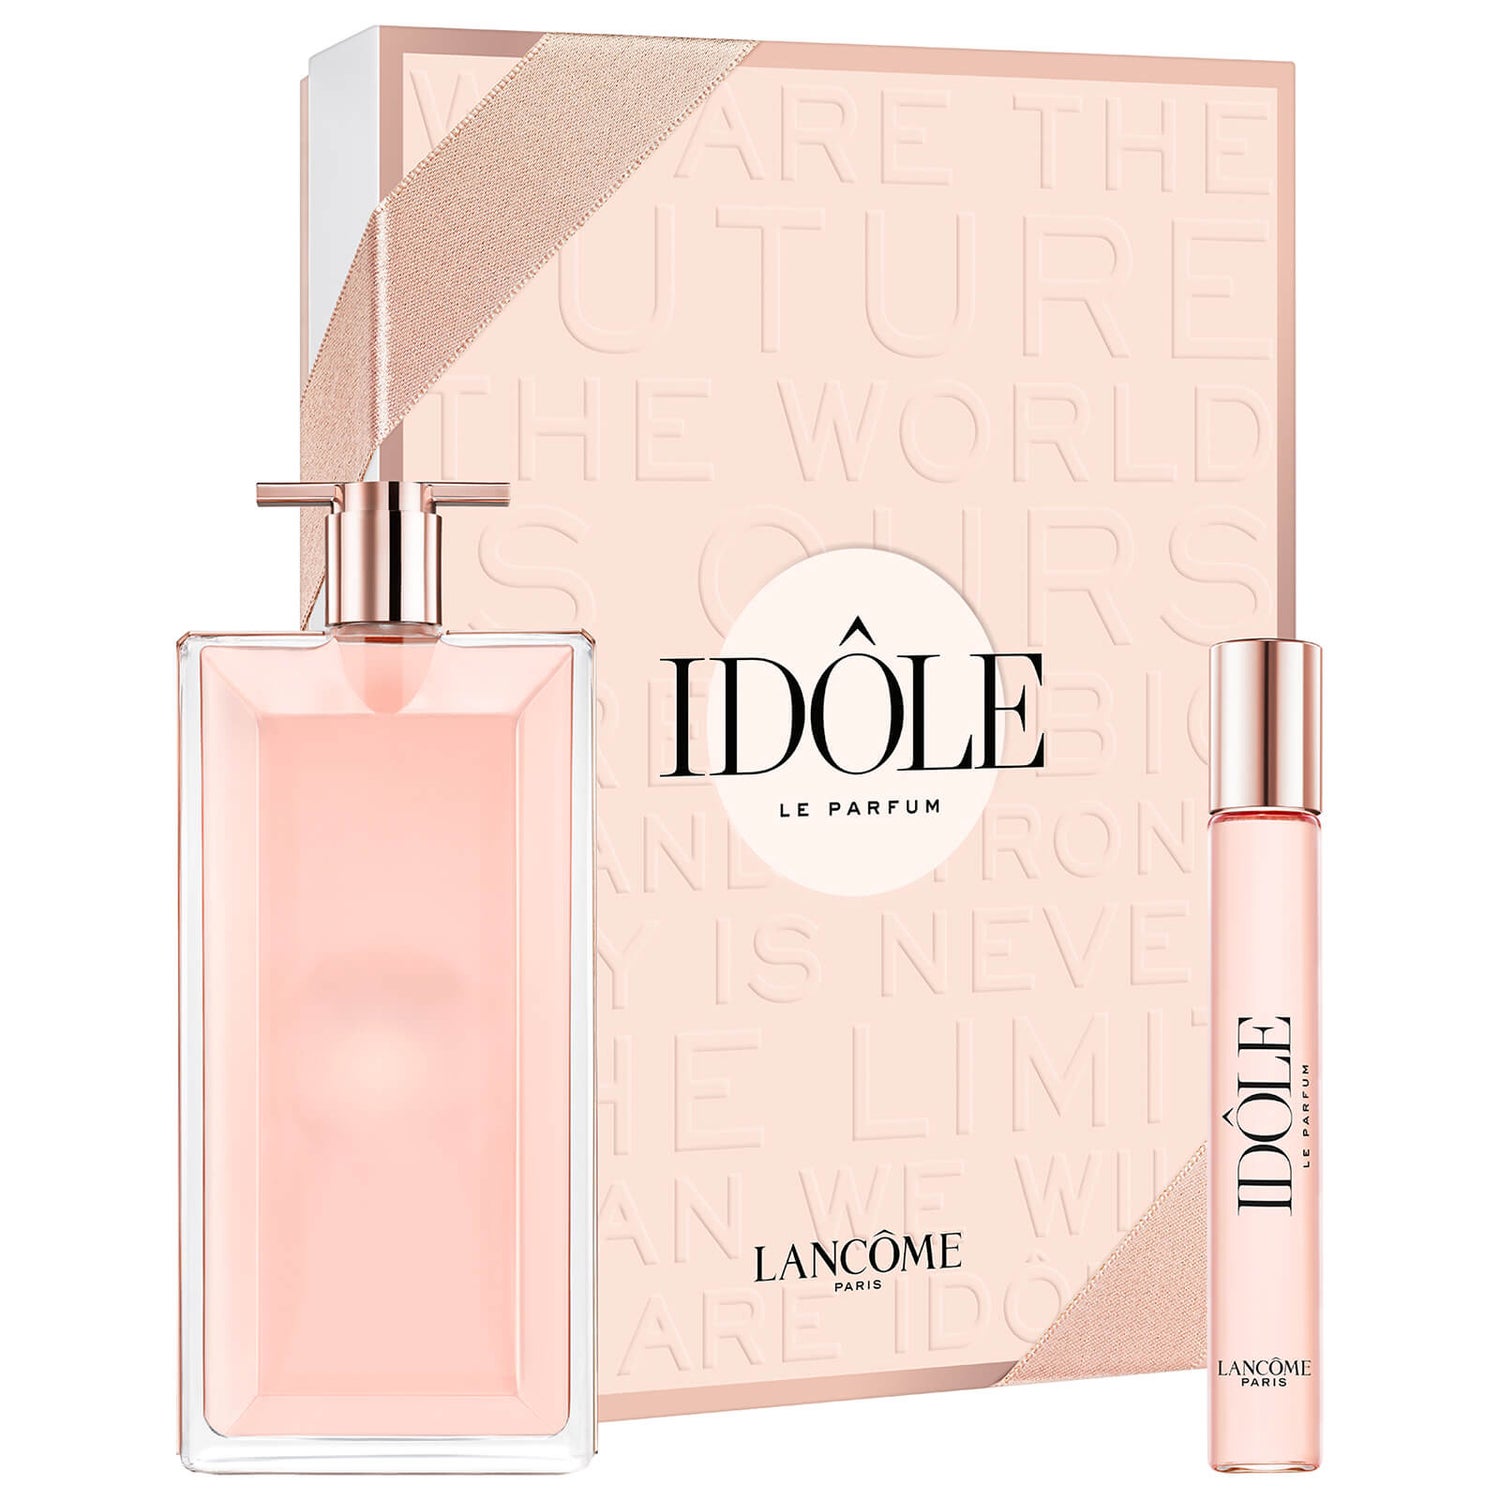 Ланком идол описание. Набор Idole Lancome подарочный. Lancome Idole, 75 ml. Idôle Lancôme 50 мл. Набор Lancome Idole le Parfum.